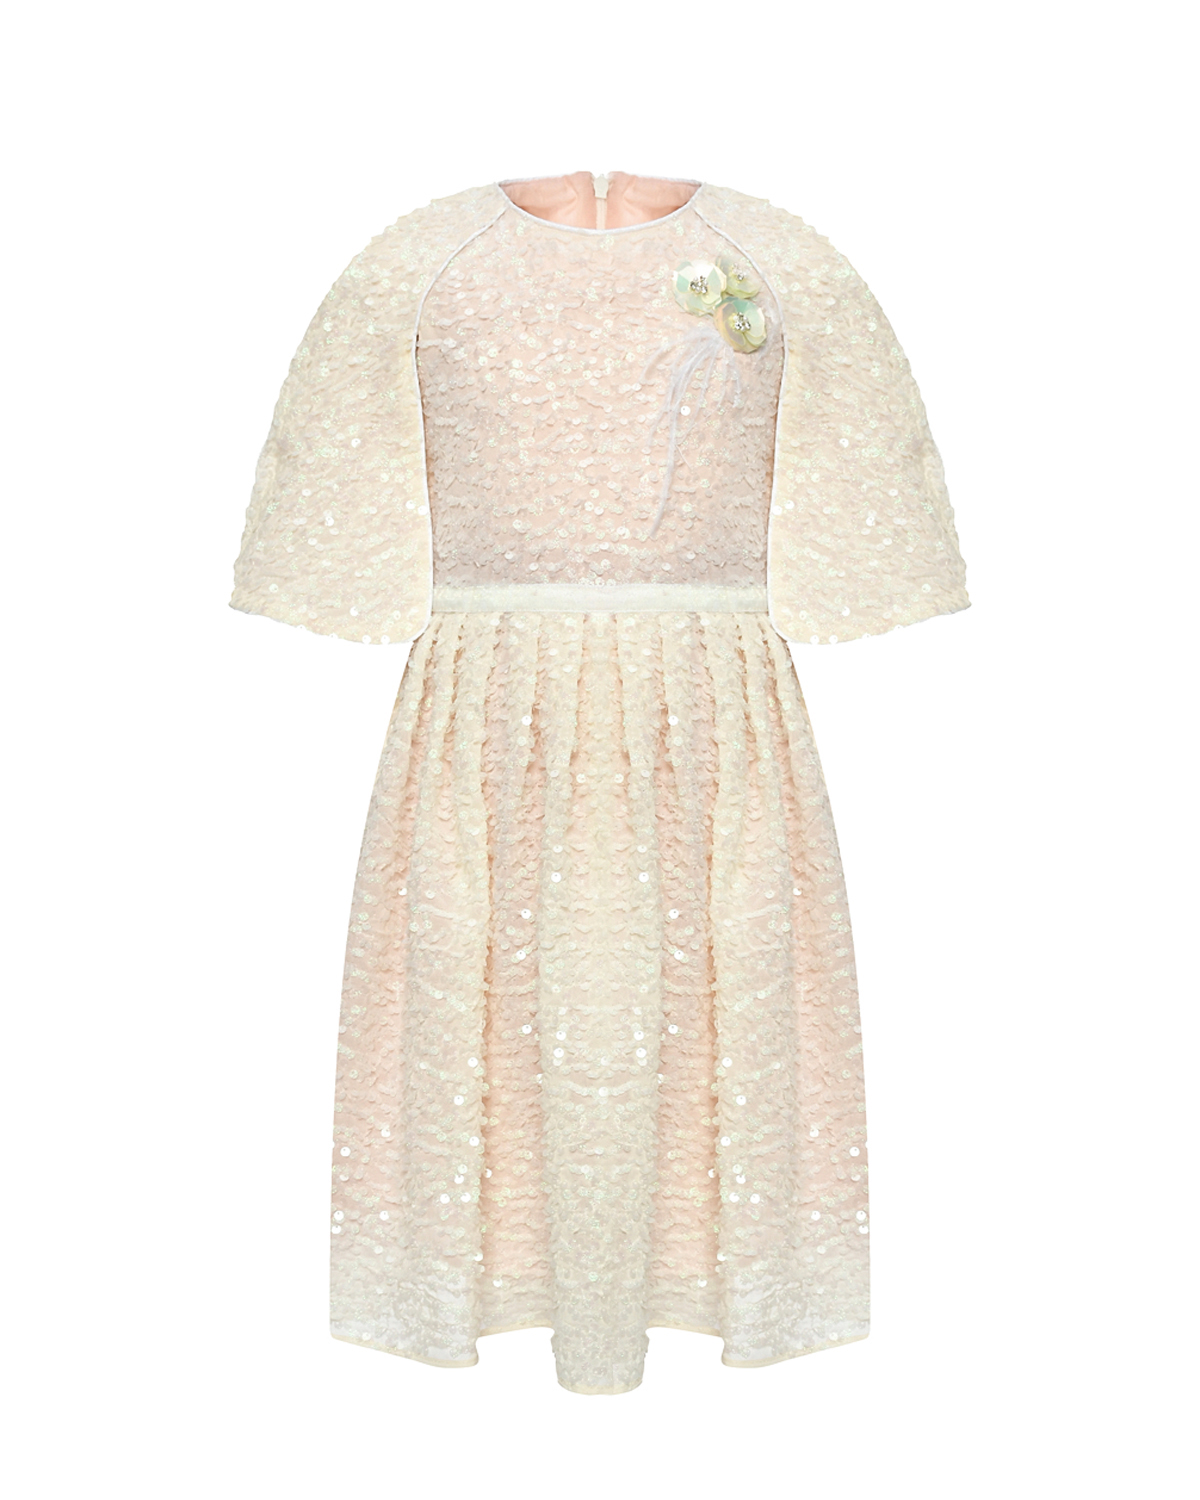 Платье с пайетками рукава-накидки, светло-розовое Eirene, размер 152, цвет нет цвета - фото 1